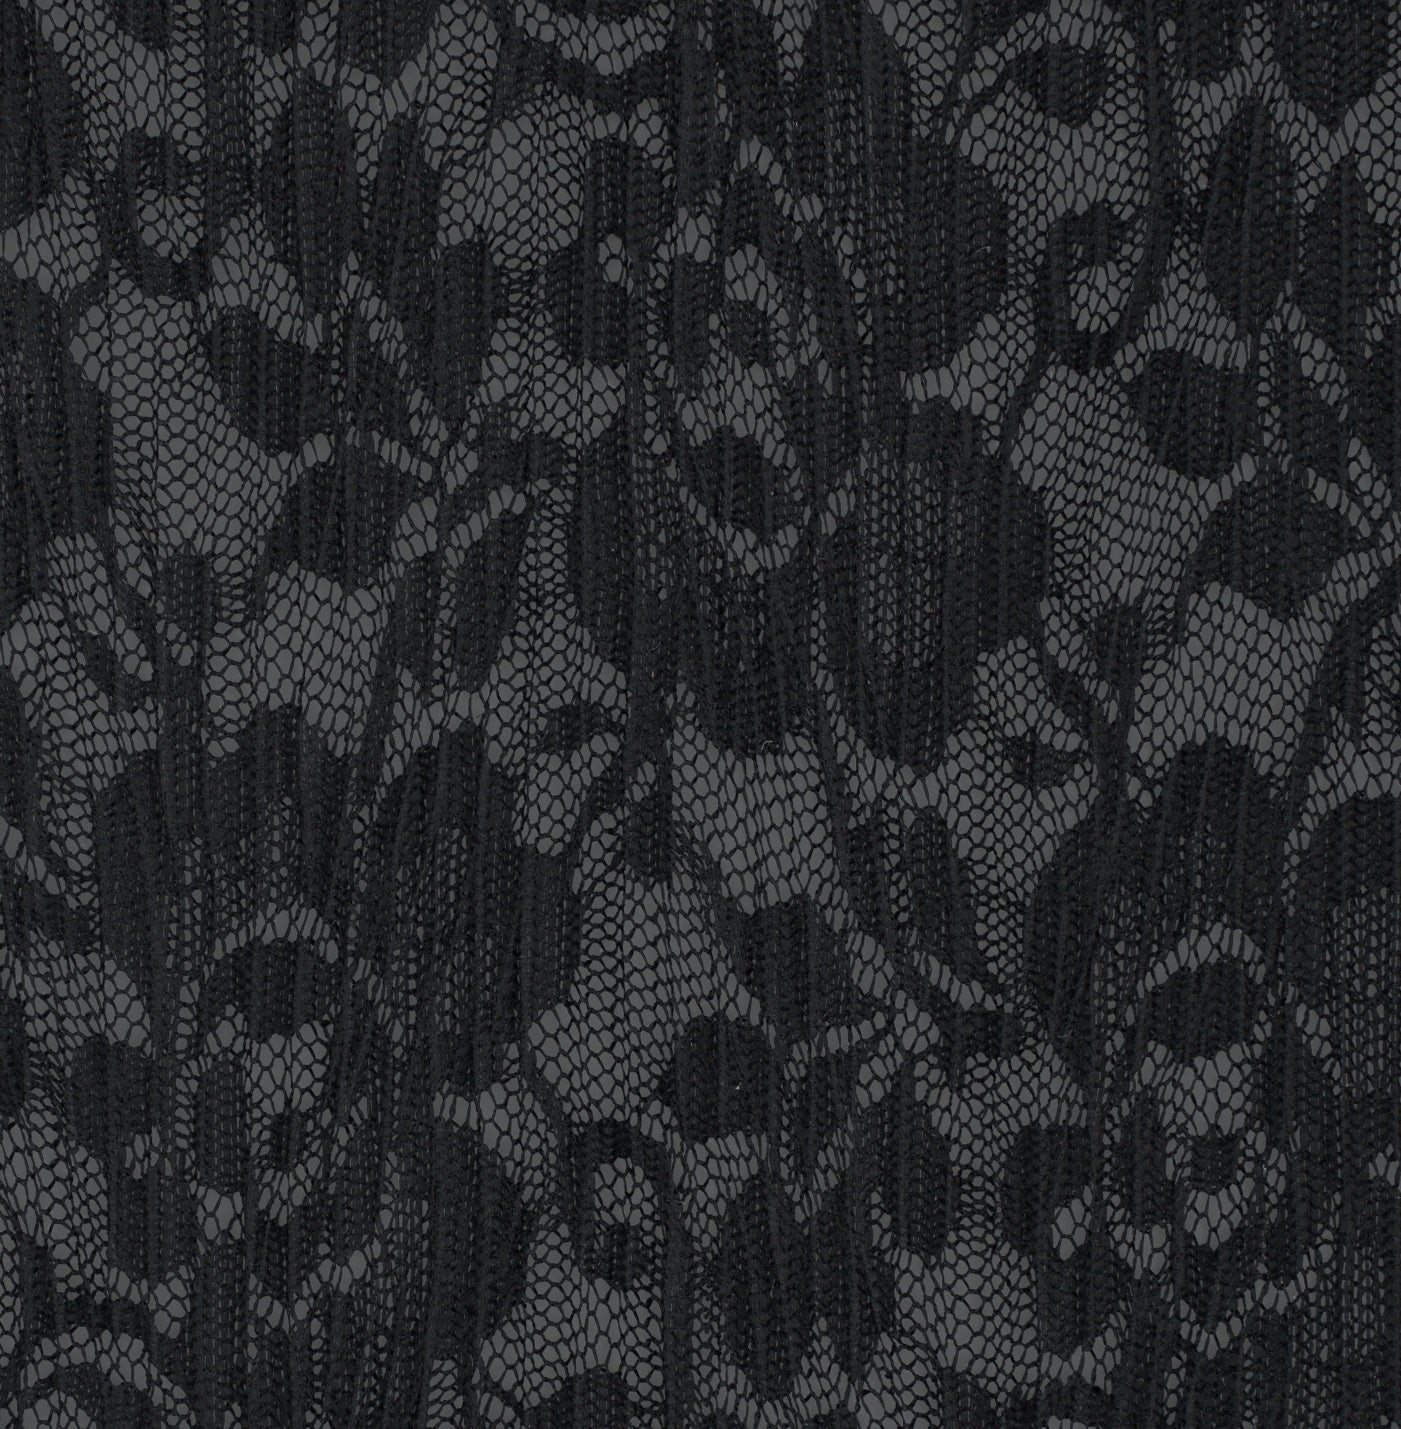 14005-01 Black Pleat Floral Pattern Lace Plain Dyed Blend black blend floral knit lace plain dyed pleat polyester spandex Lace, Pleat - knit fabric - woven fabric - fabric company - fabric wholesale - fabric b2b - fabric factory - high quality fabric - hong kong fabric - fabric hk - acetate fabric - cotton fabric - linen fabric - metallic fabric - nylon fabric - polyester fabric - spandex fabric - chun wing hing - cwh hk - fabric worldwide ship - 針織布 - 梳織布 - 布料公司- 布料批發 - 香港布料 - 秦榮興